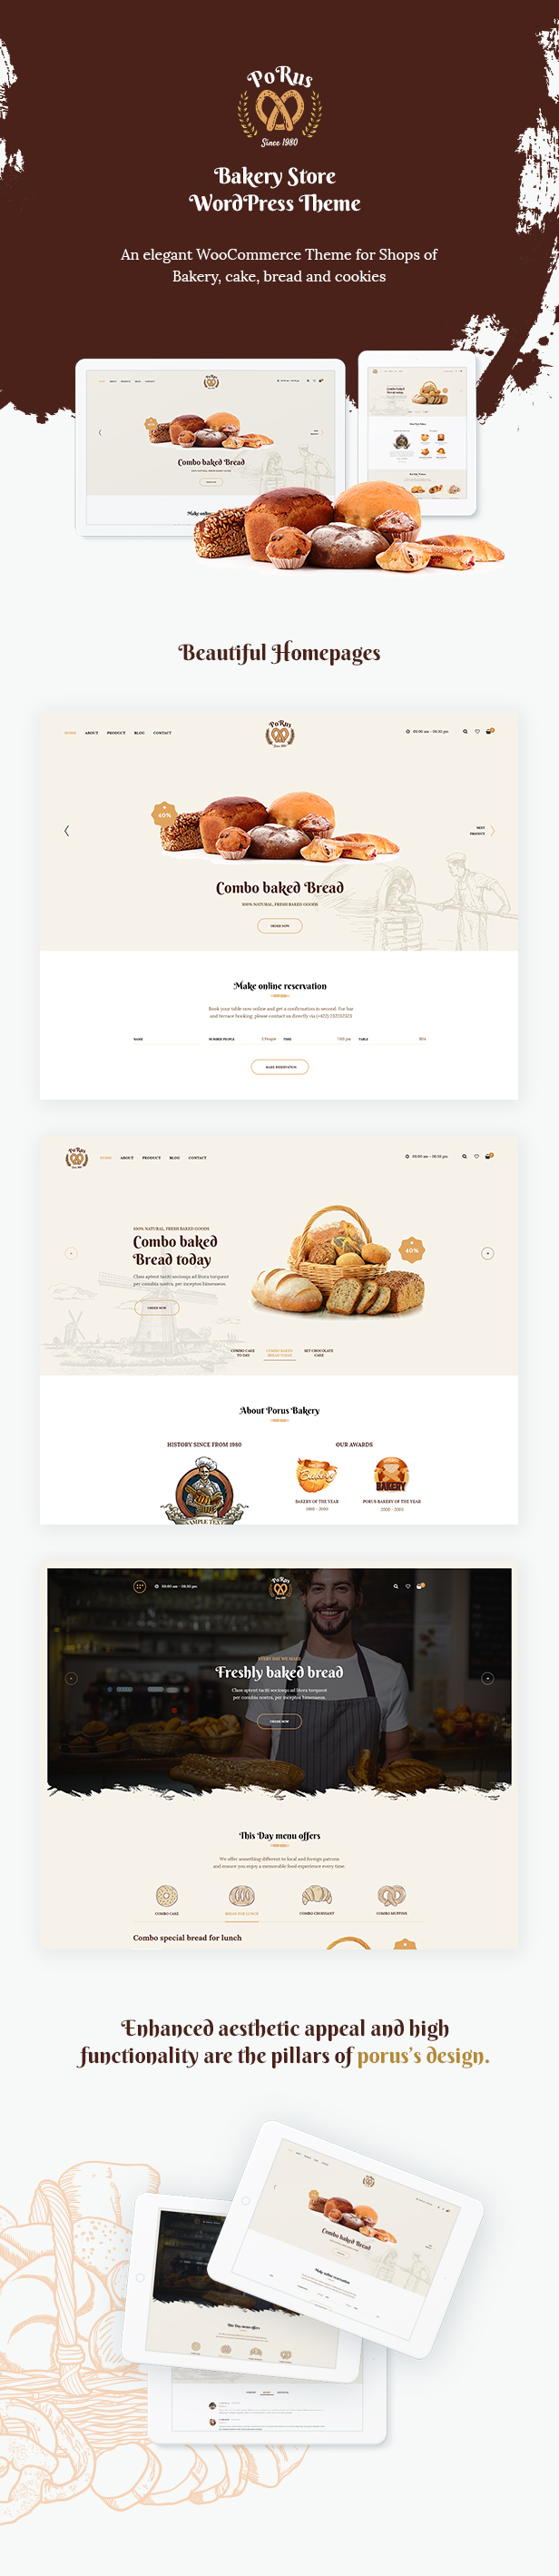 Porus - Bakery Store WordPress Theme - 9